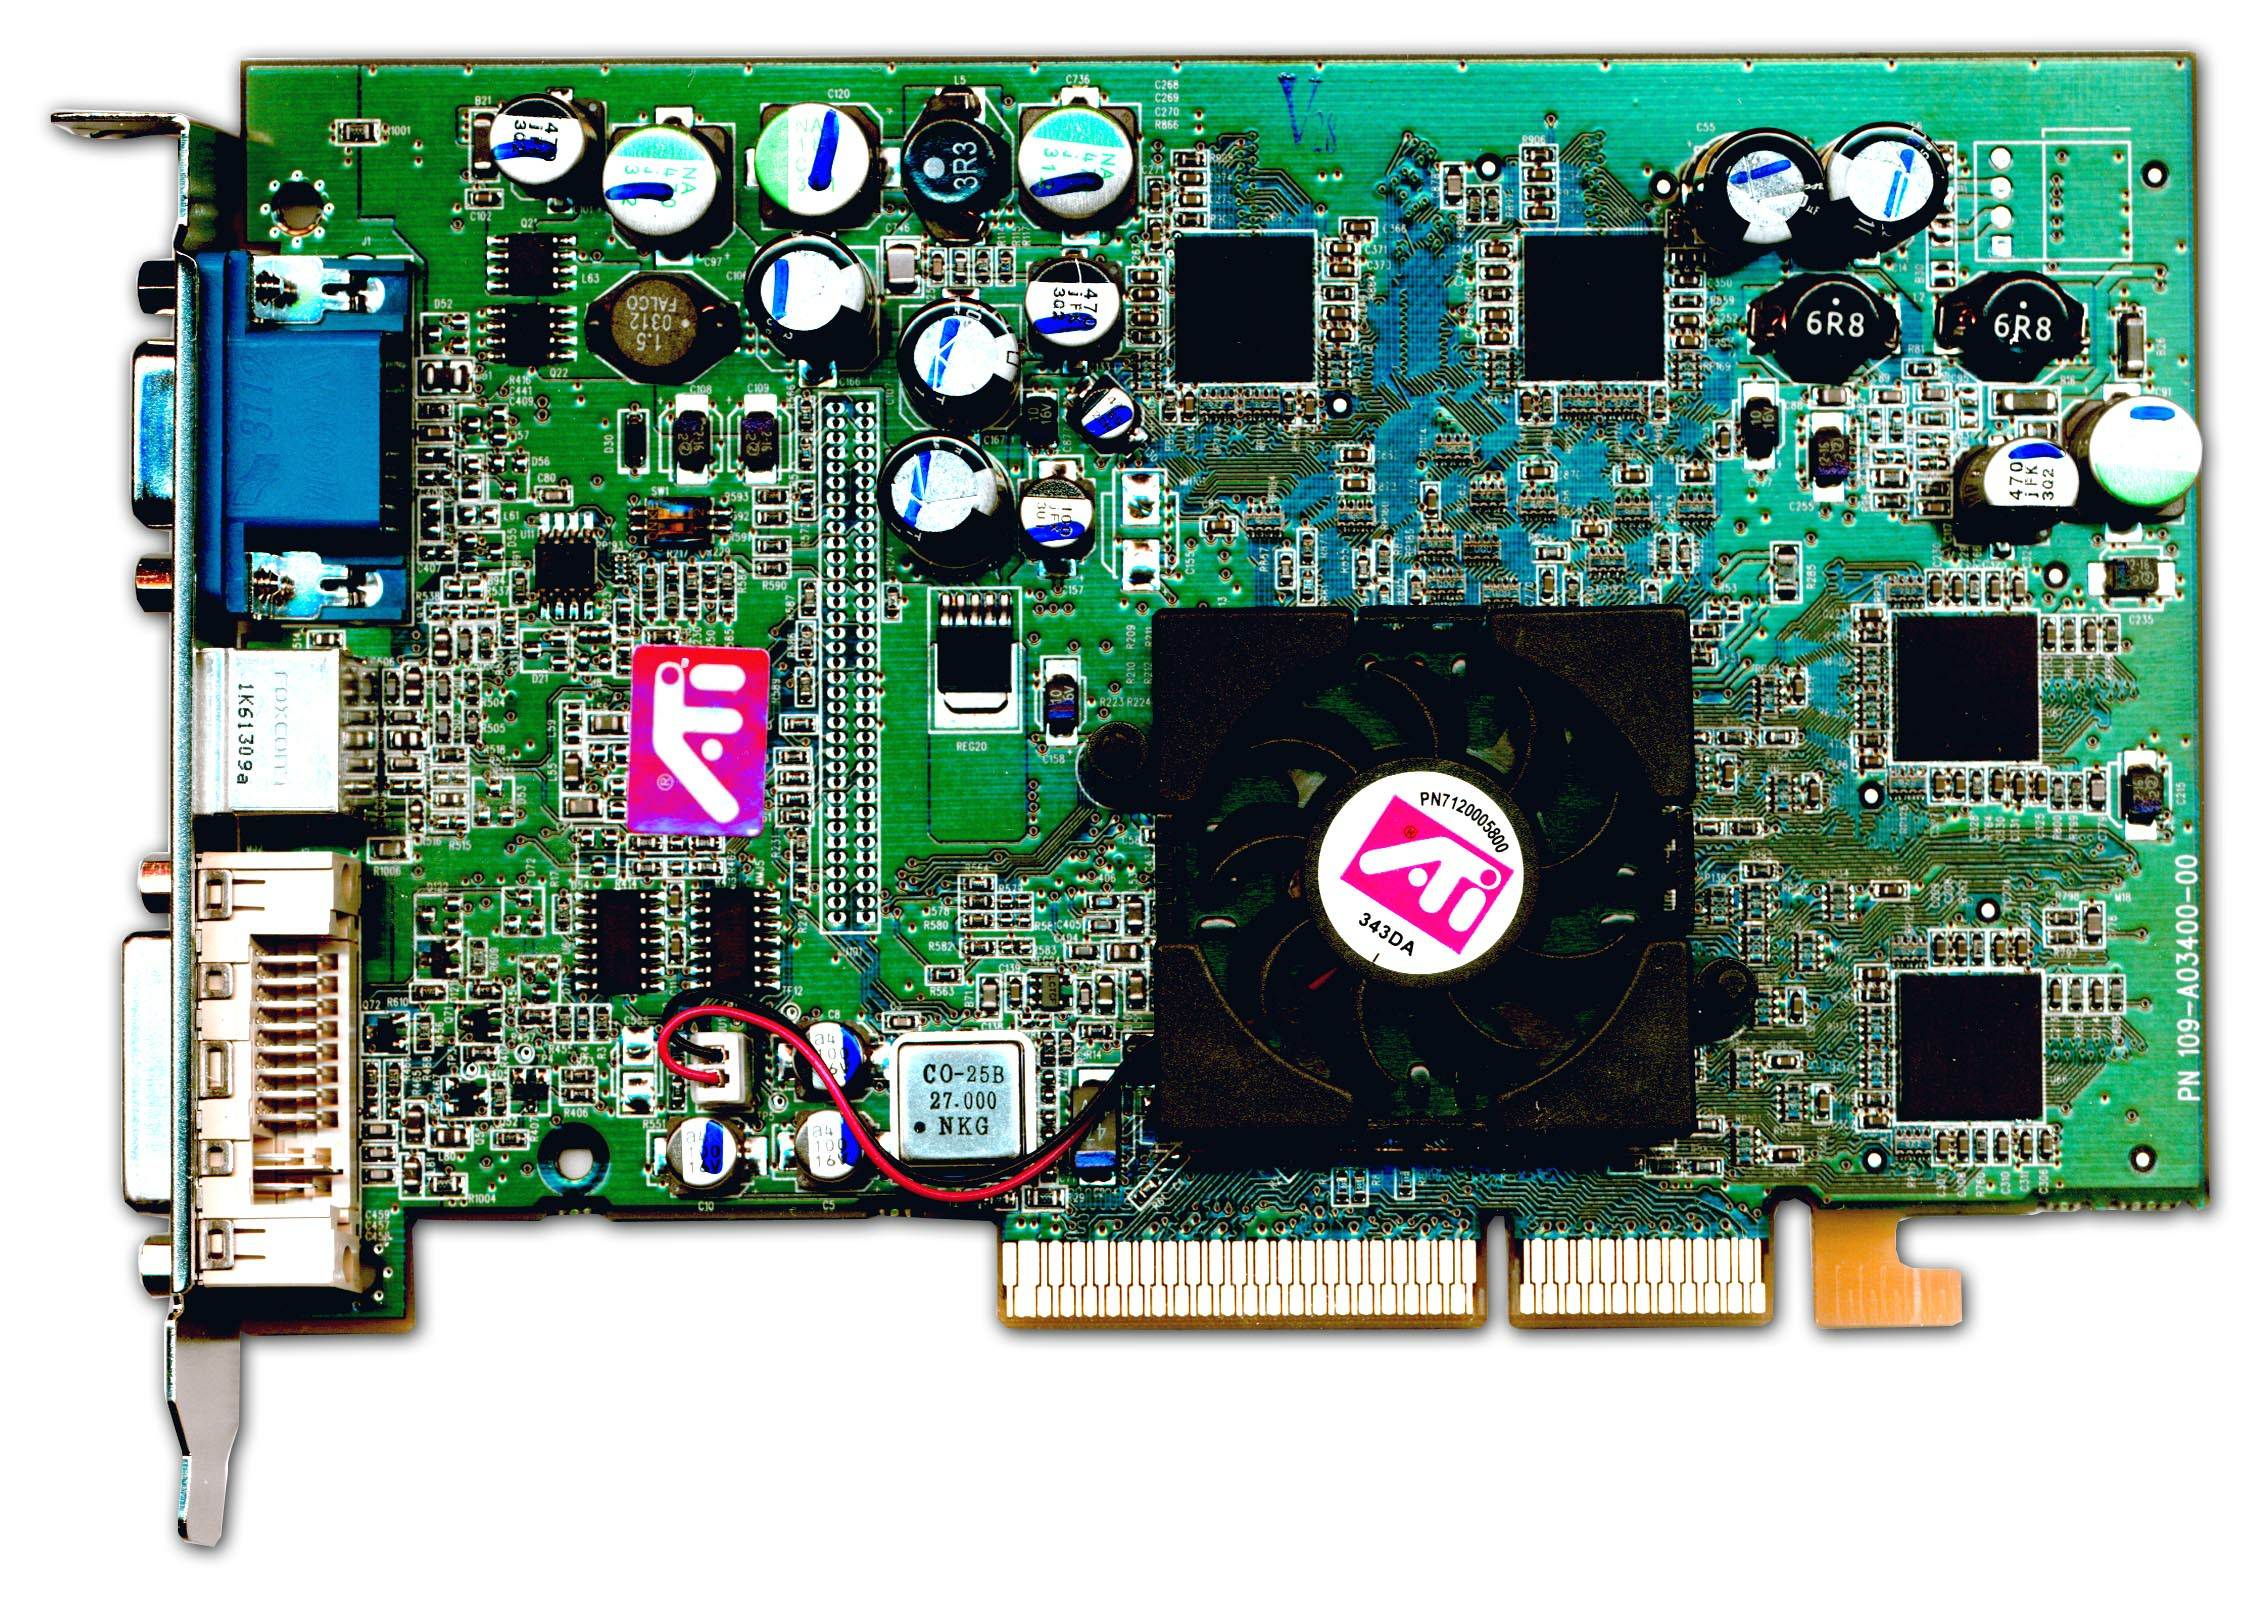 October 2003 3Digest: ATI RADEON 9600 Pro 128MB DDR (400/600 MHz)